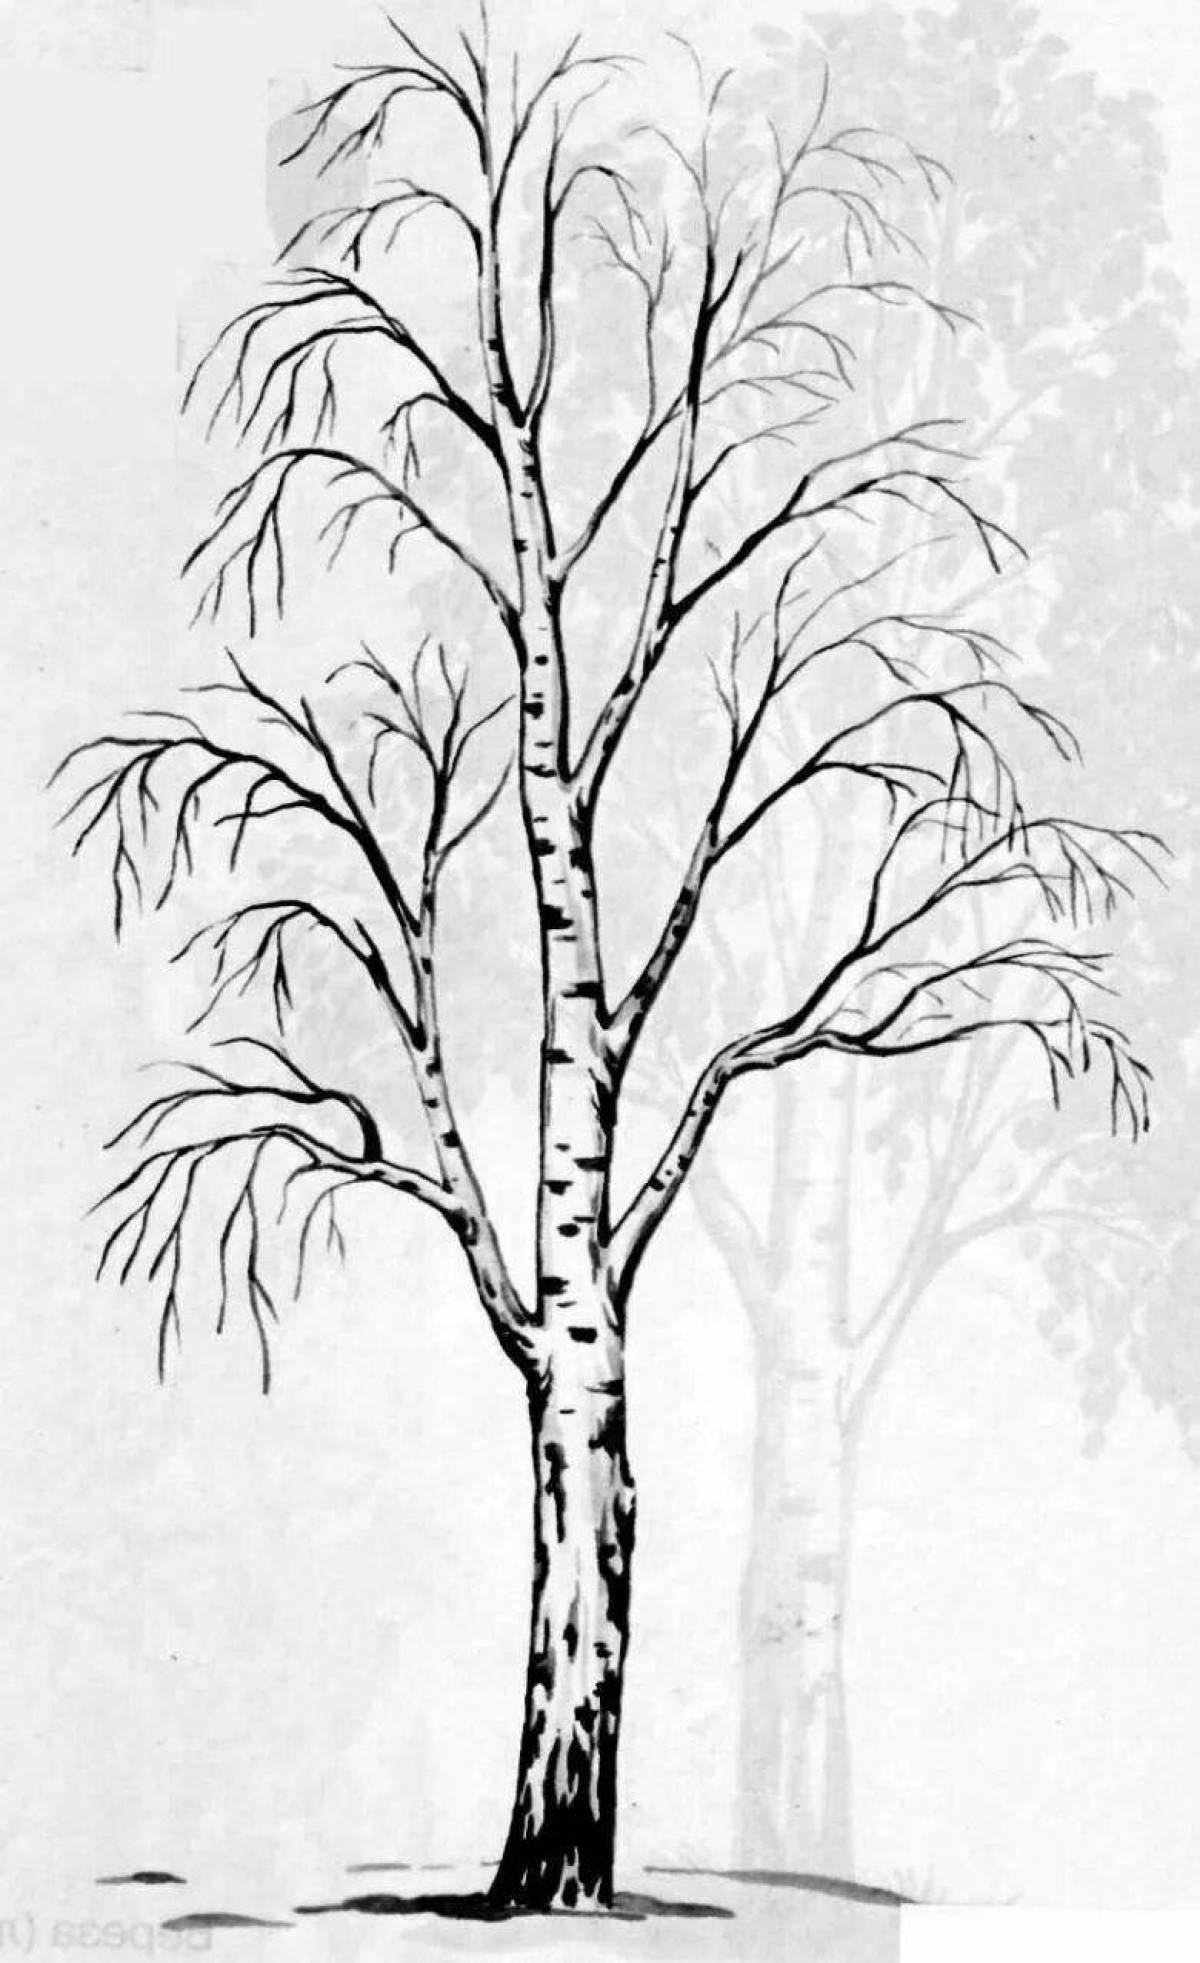 Exquisite birch in snow coloring book